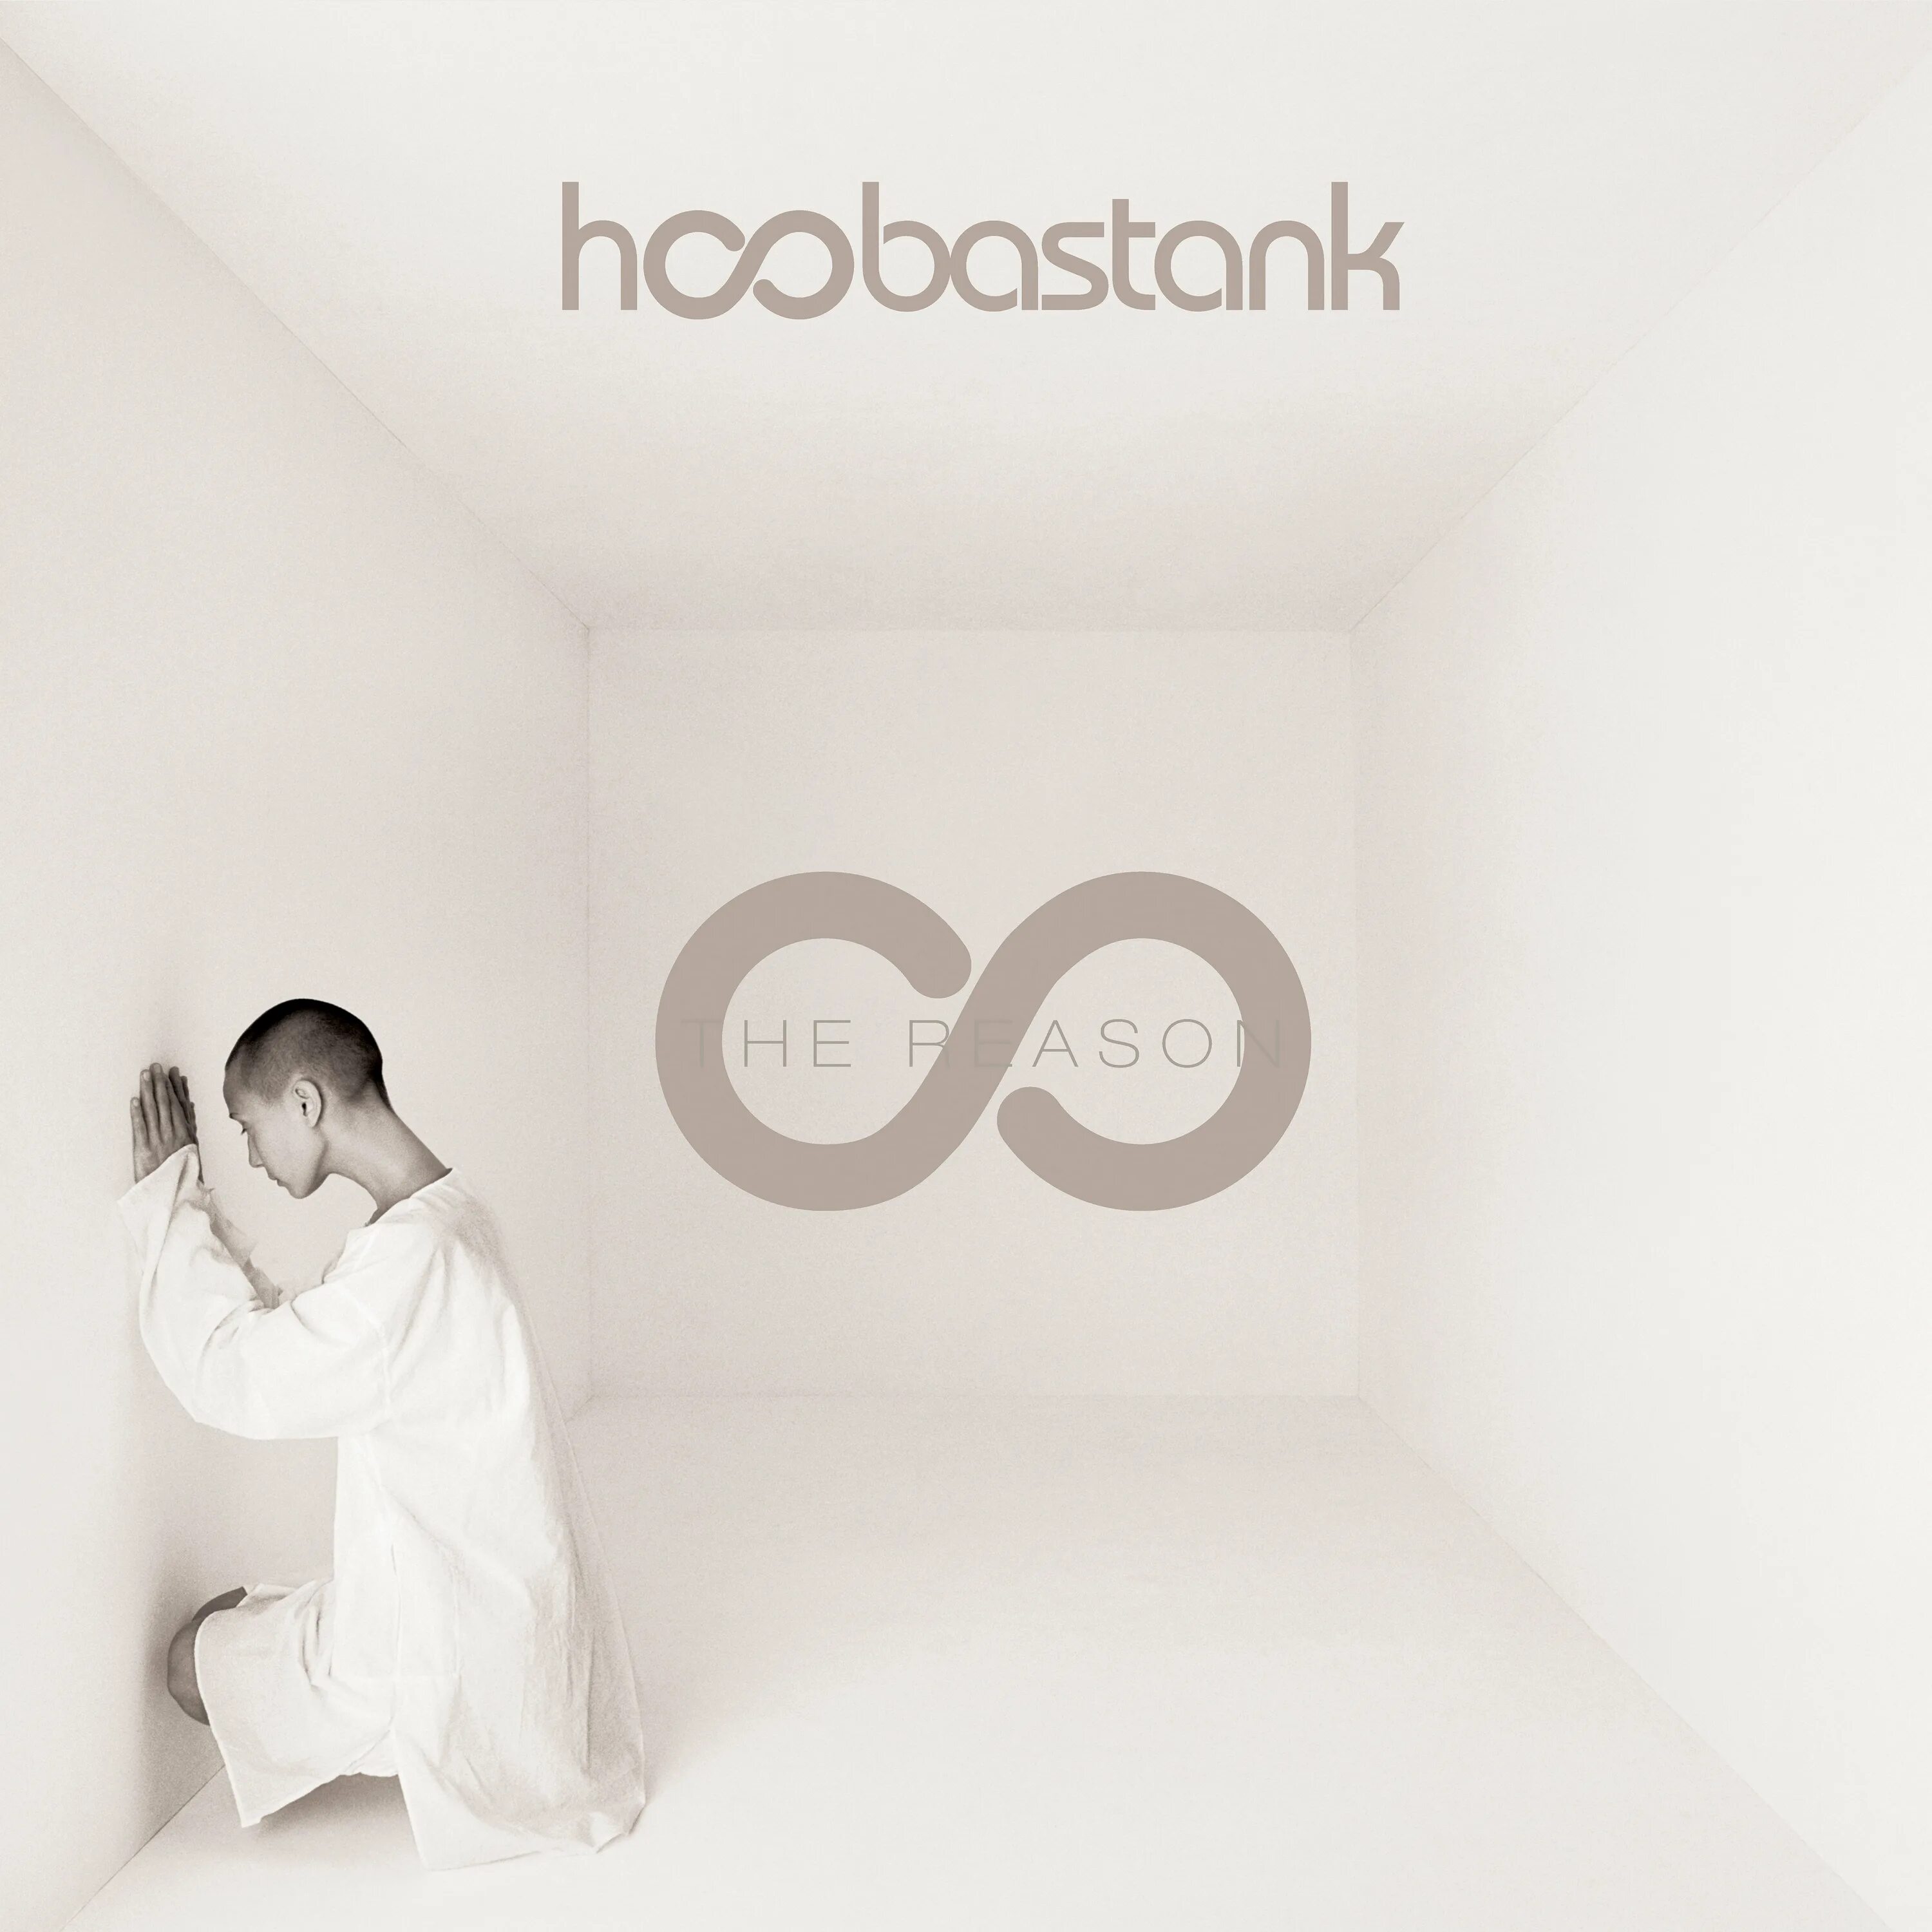 Hoobastank. Reason. Hoobastank the reason альбом. Hoobastank обложки альбомов. The reason for not doing